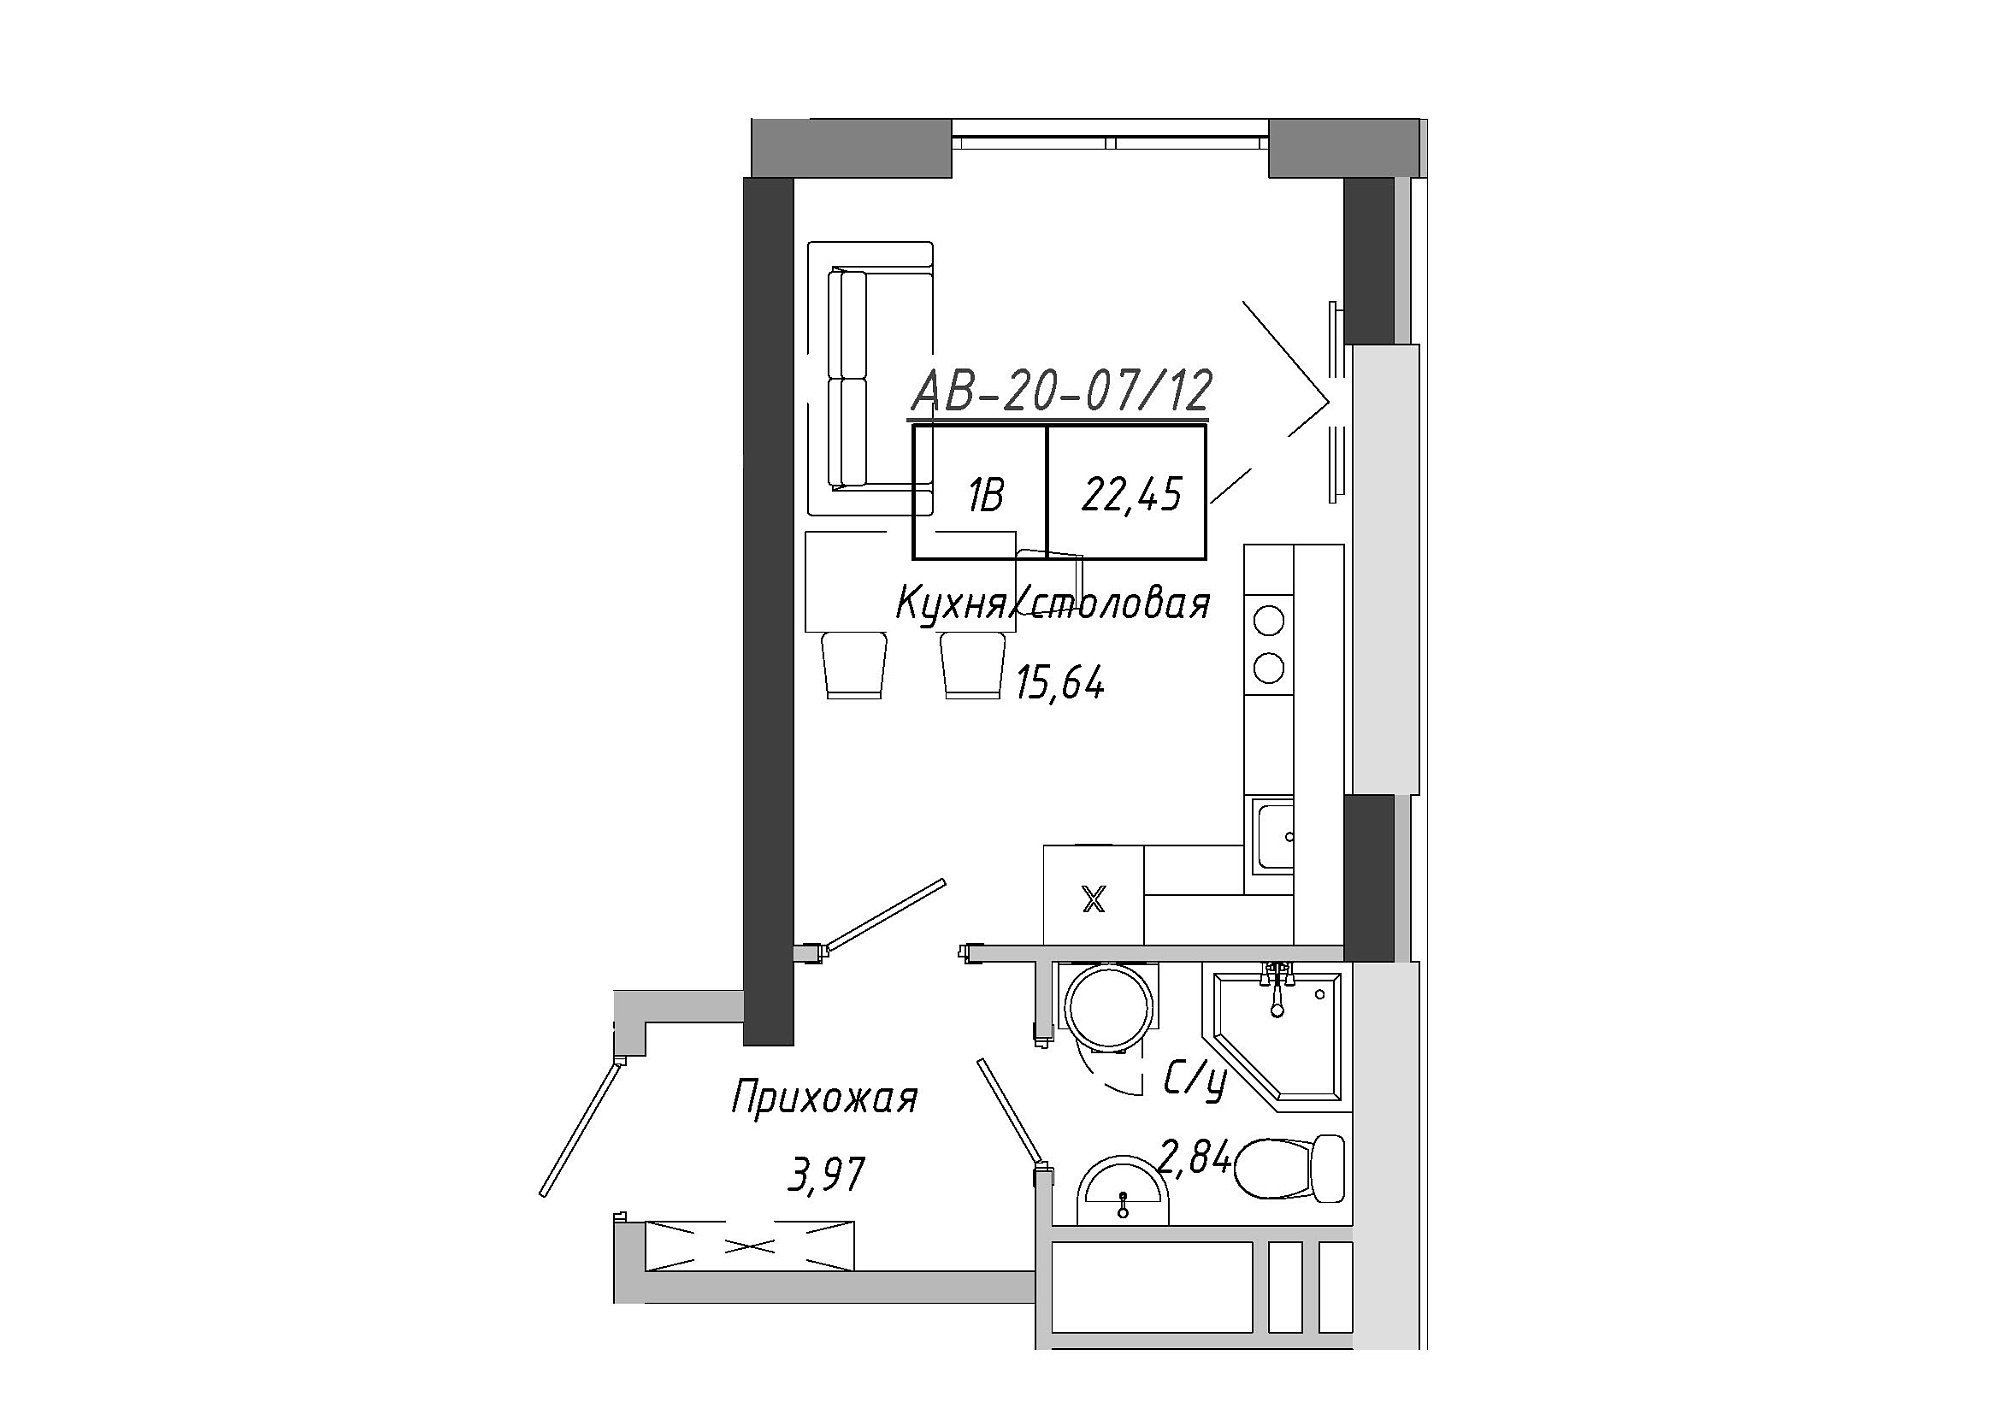 Planning Smart flats area 21.87m2, AB-20-07/00012.